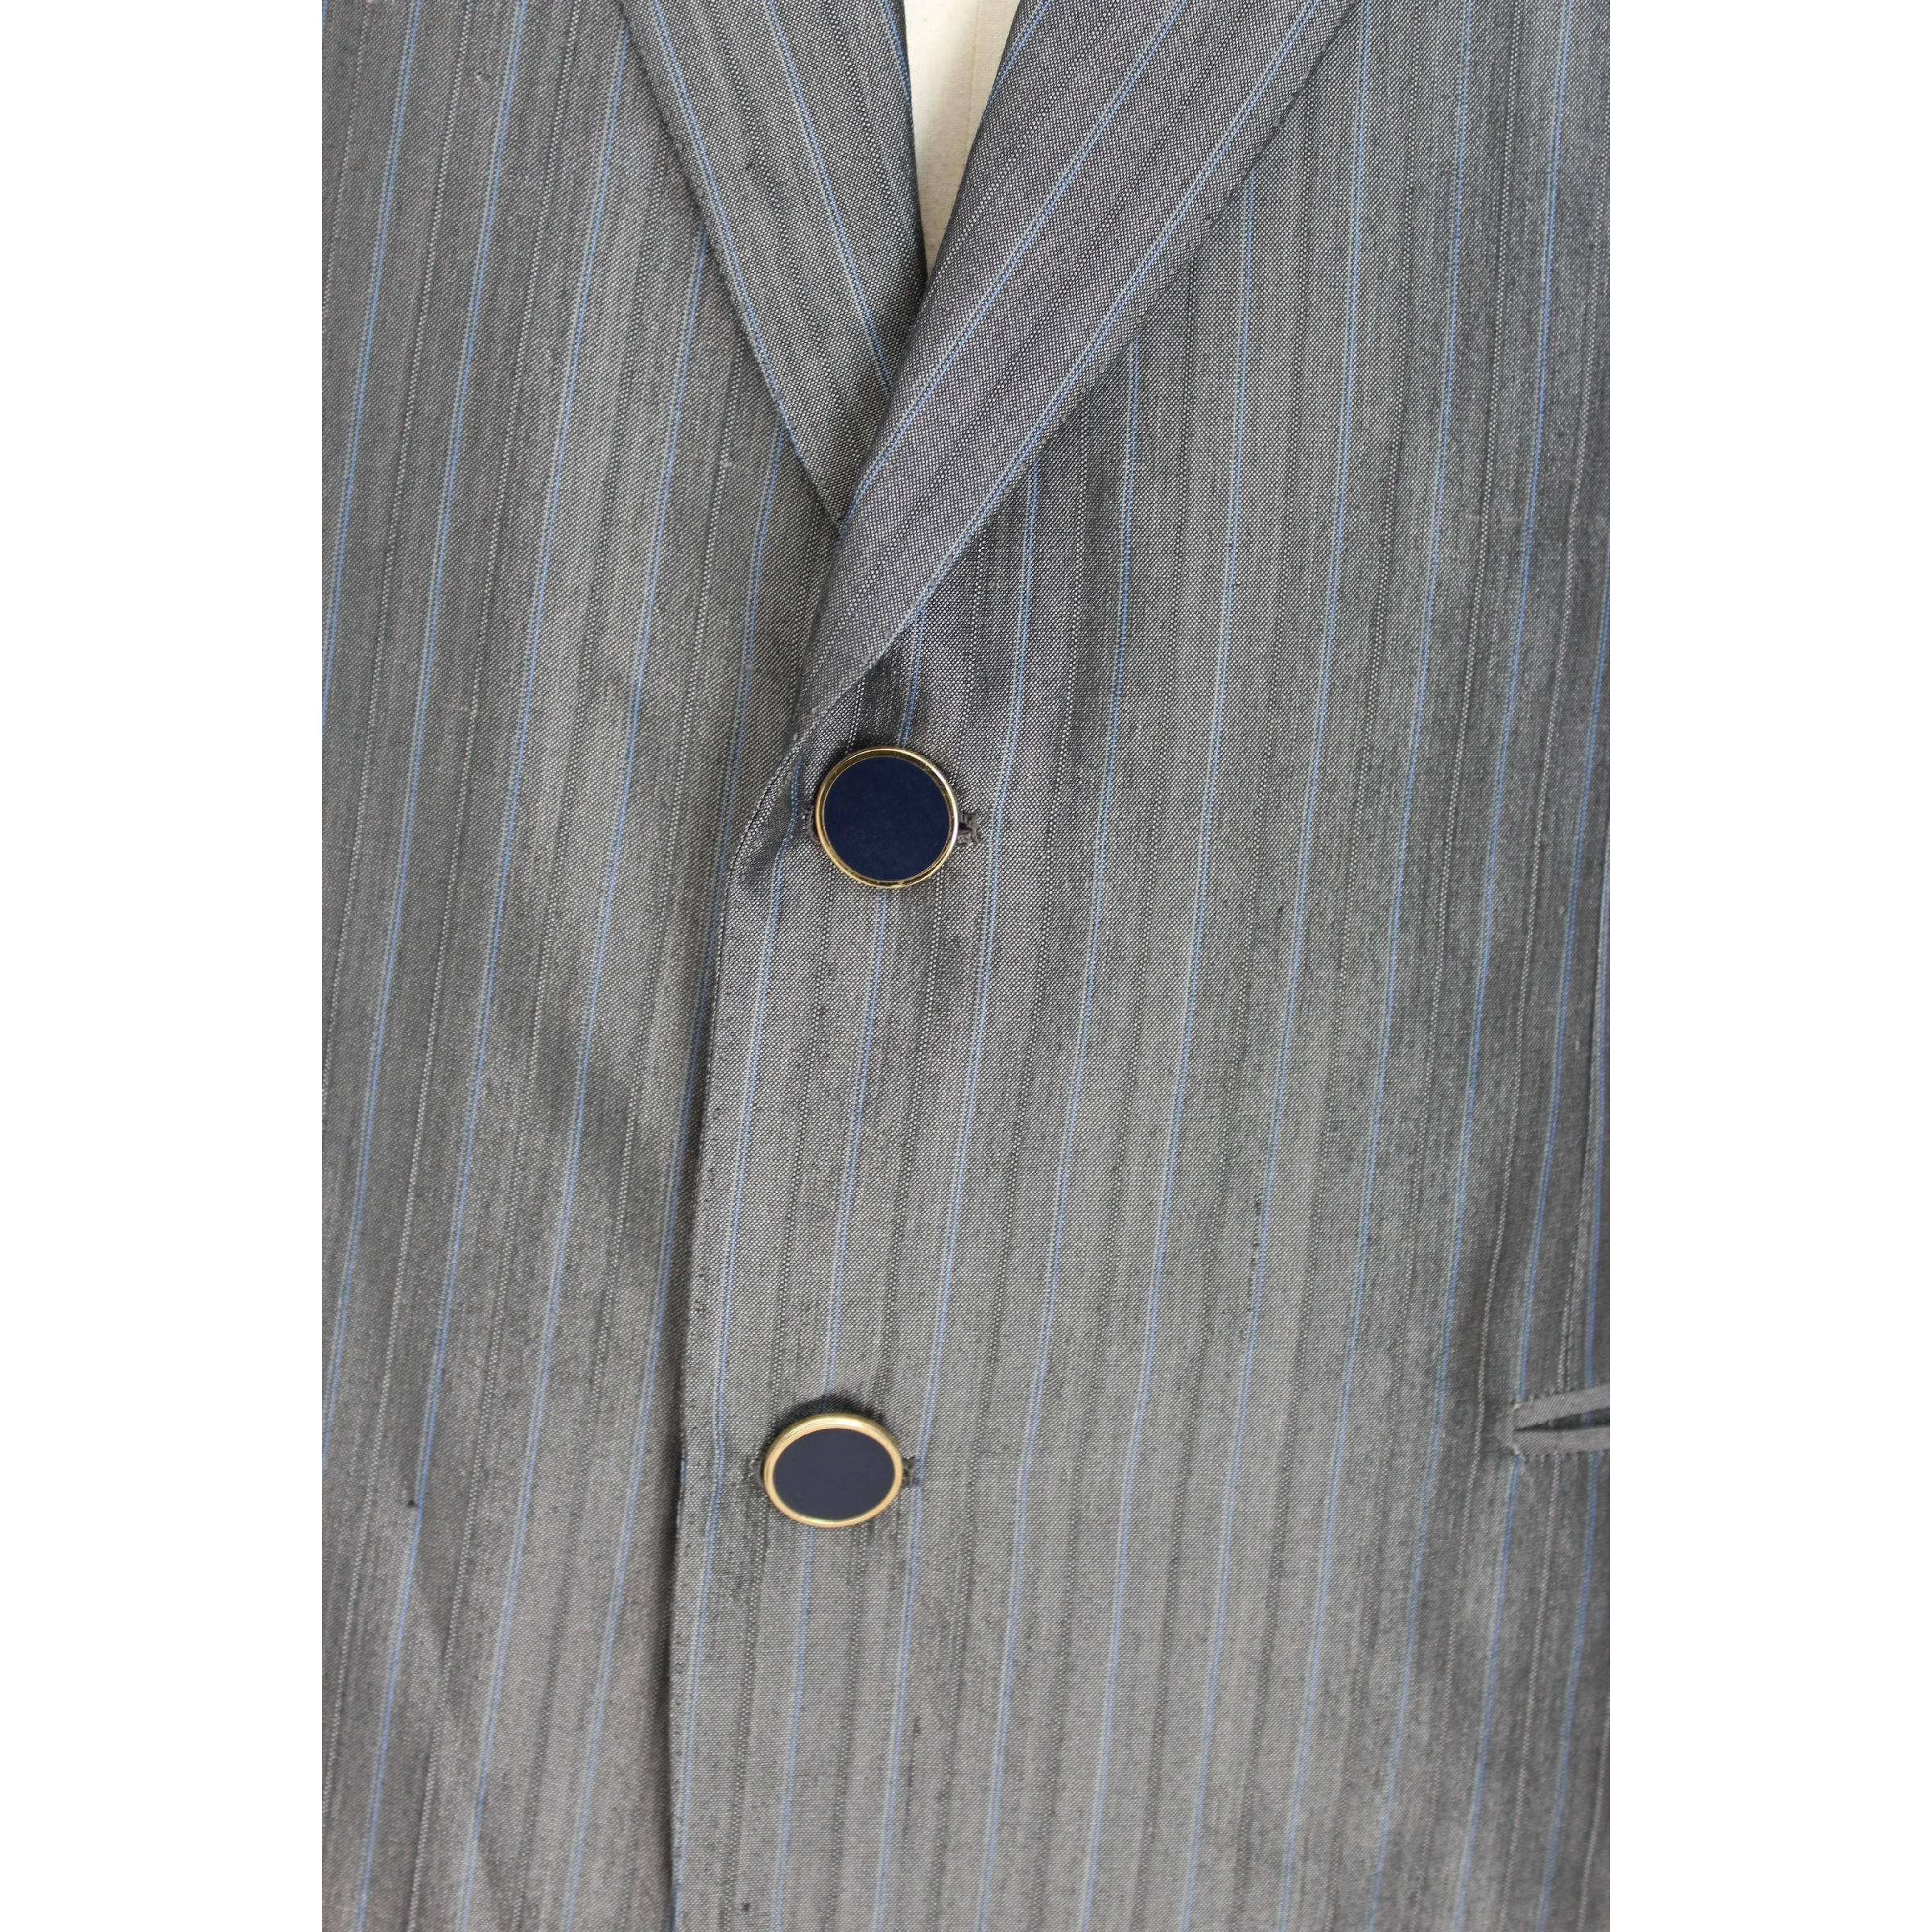 Women's or Men's Brioni Suit Pants Jacket Trousers Pinstripe Vintage Gray Silk 